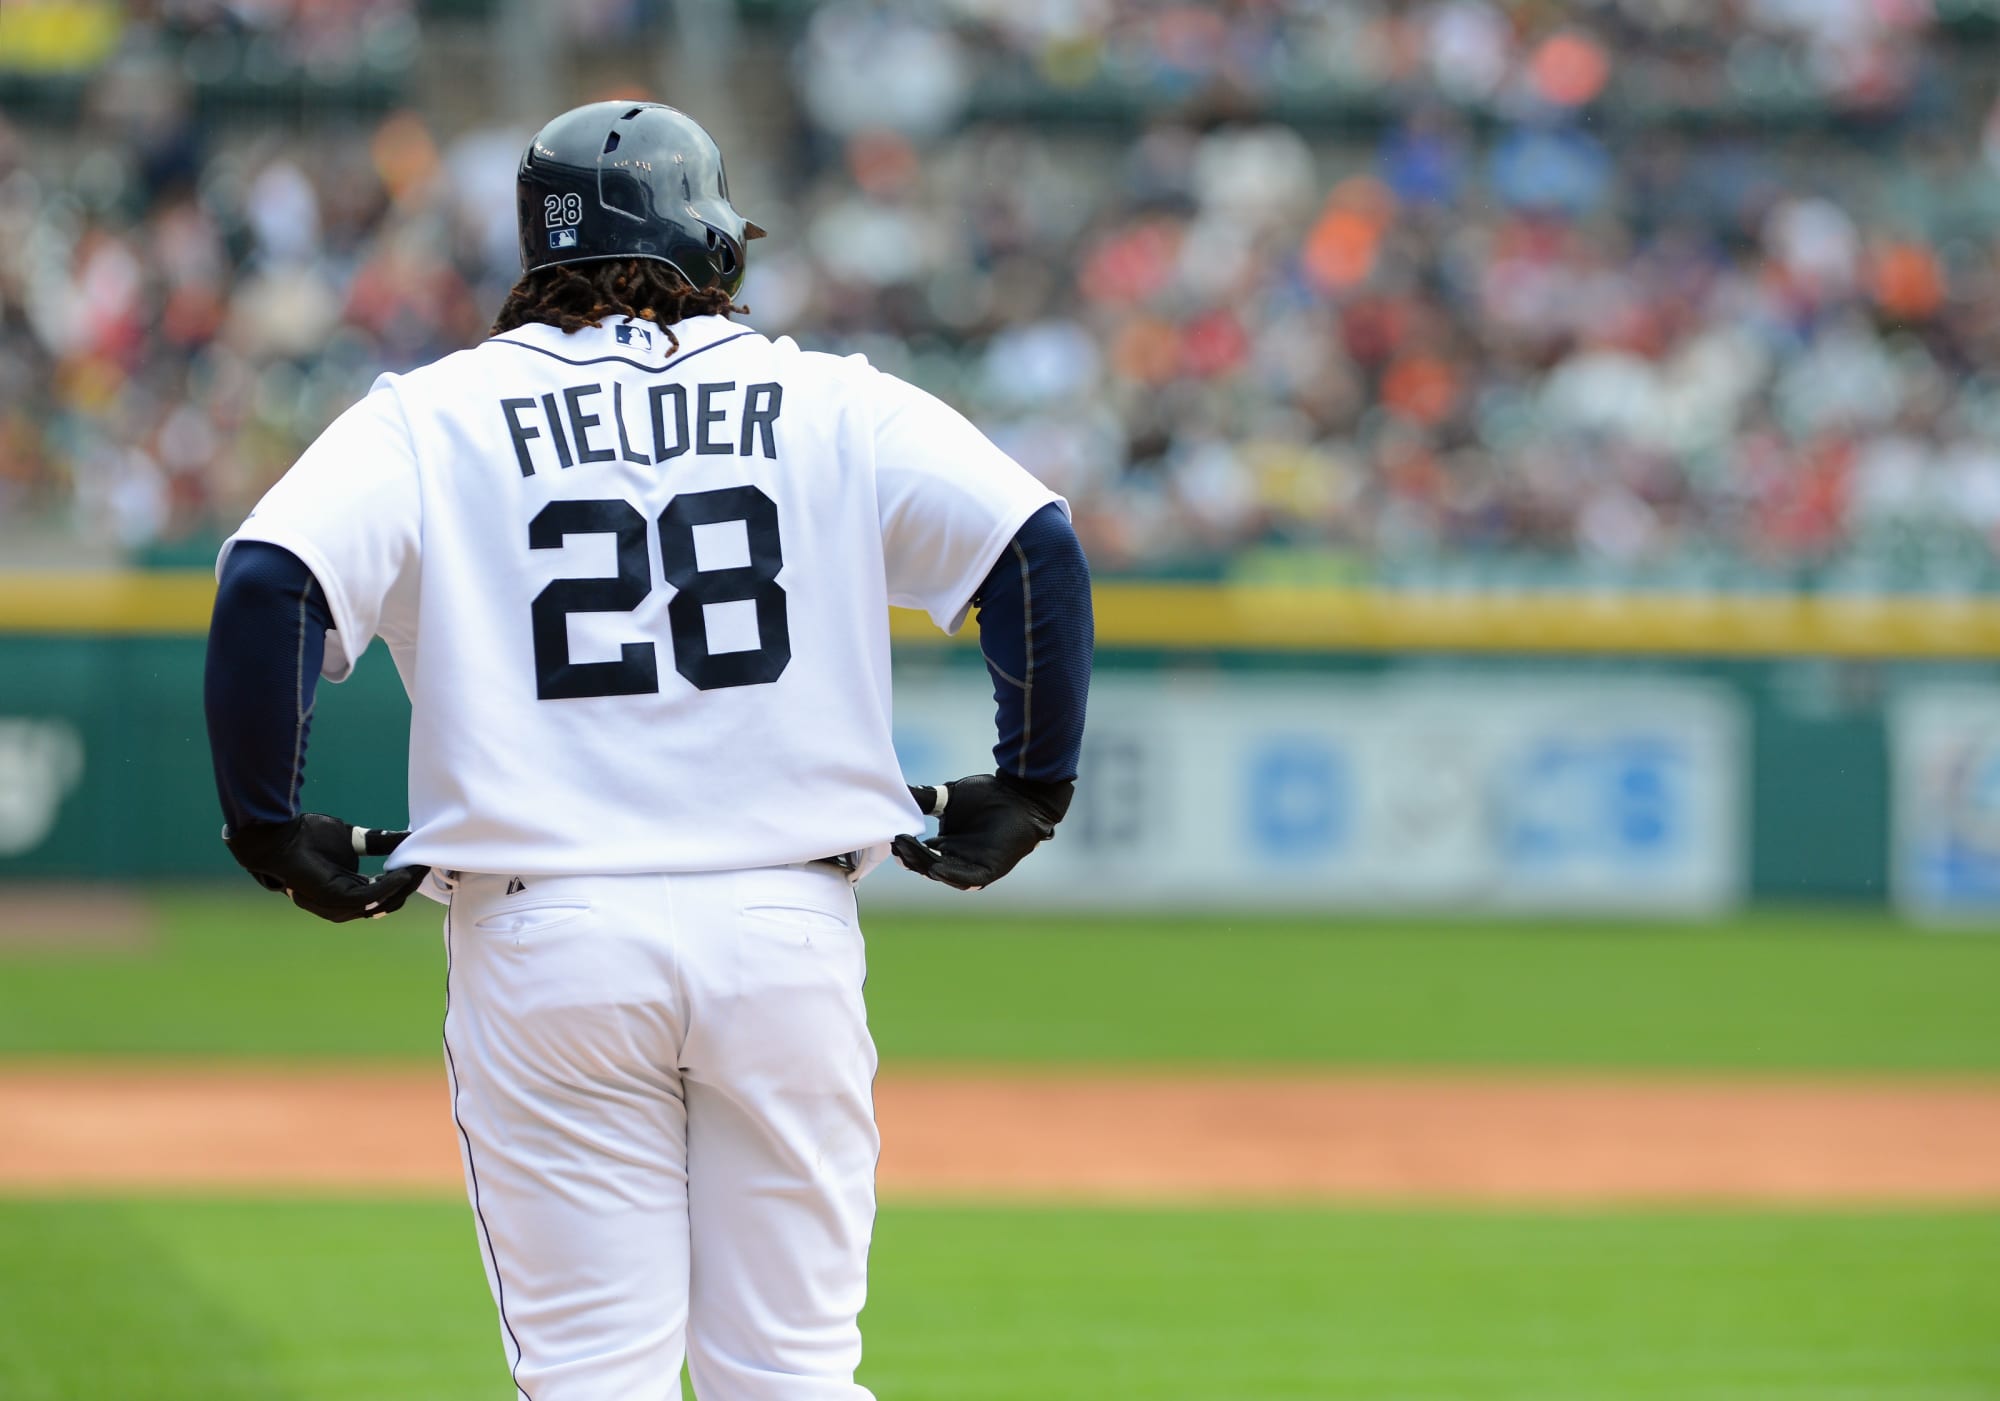 Cecil Fielder Prince Fielder 319 career home runs